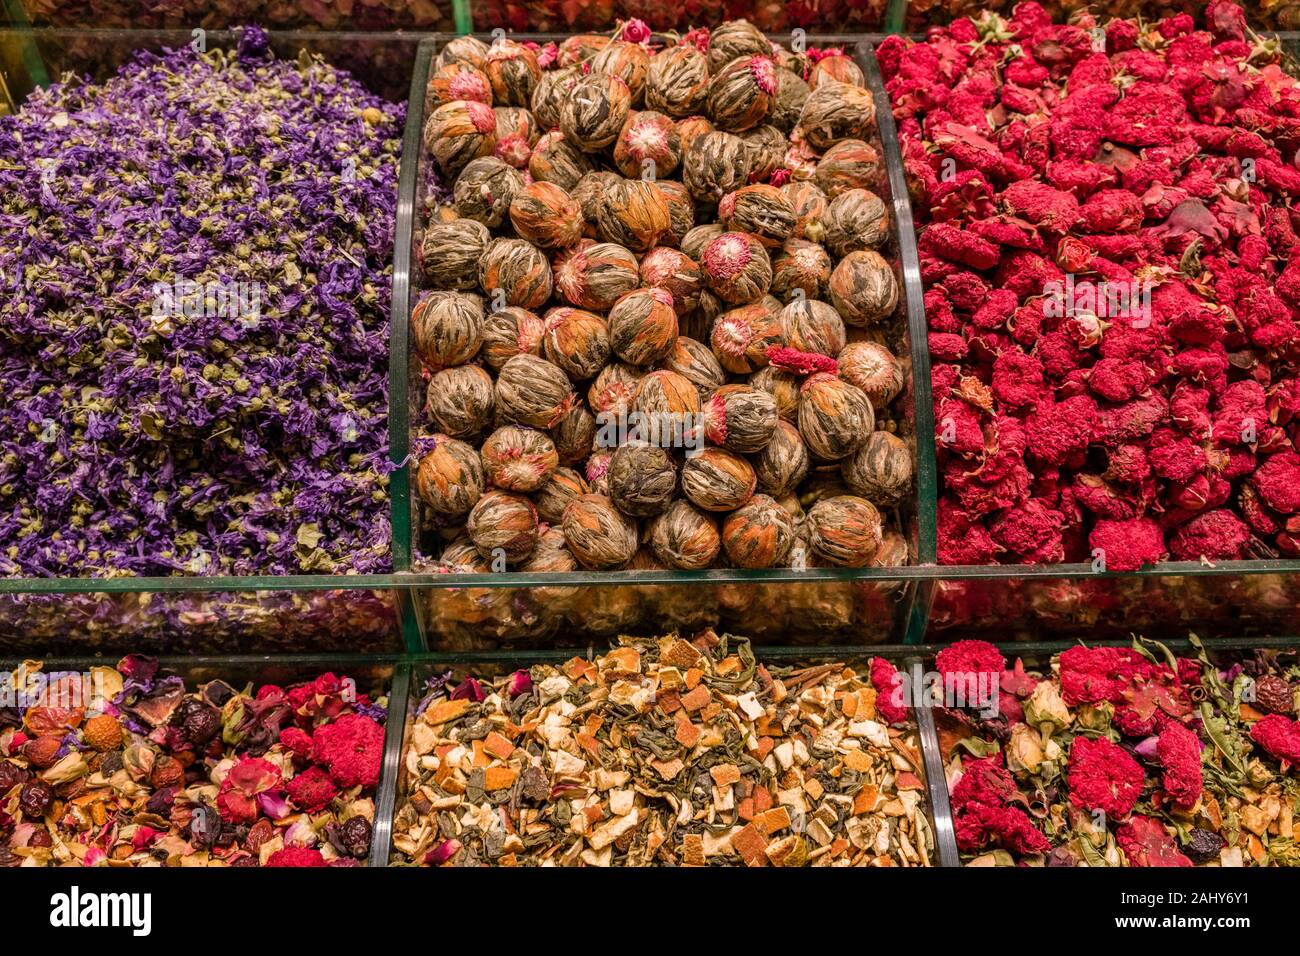 Big variety of different teas are offered for sale inside the Spice Bazaar, Mısır Çarşısı, also known as Egyptian Bazaar Stock Photo